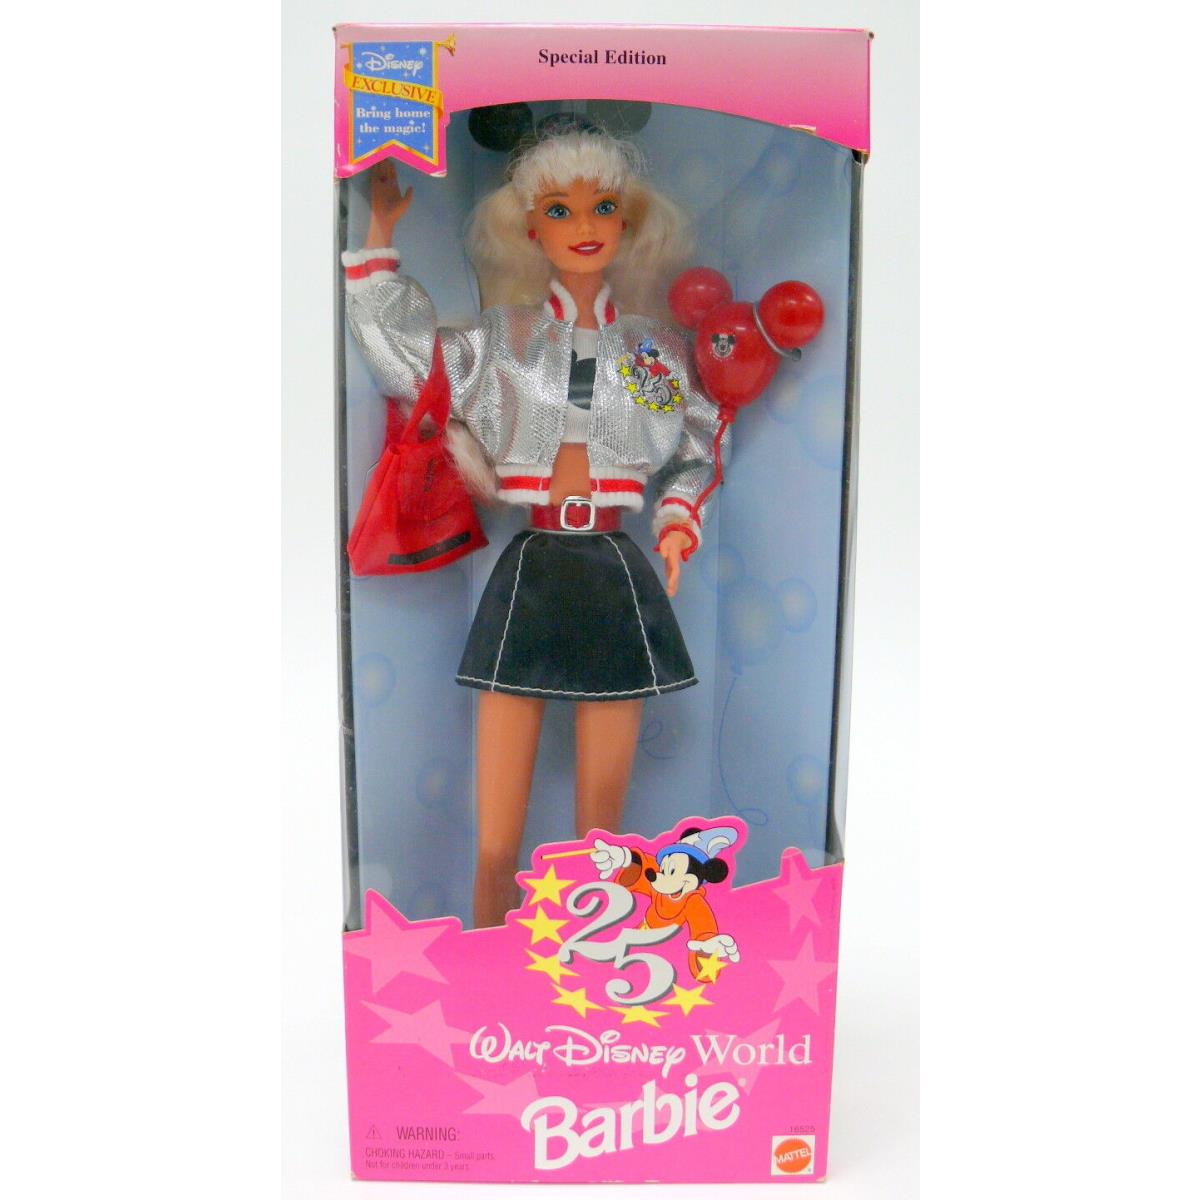 Walt Disney World Barbie 25th Anniversary Special Edition Nrfb